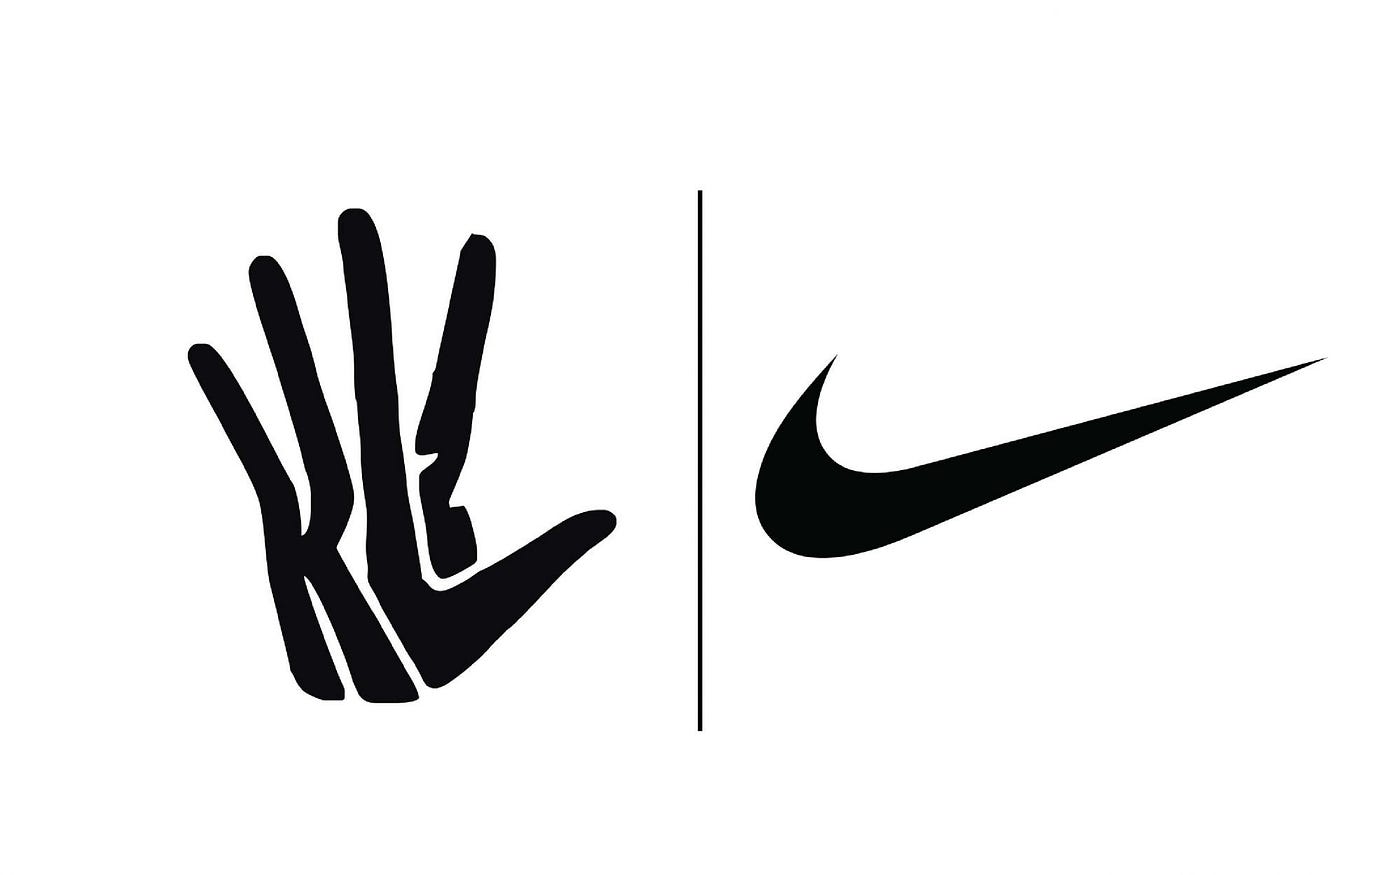 Kawhi Leonard sues Nike over rights to personal logo